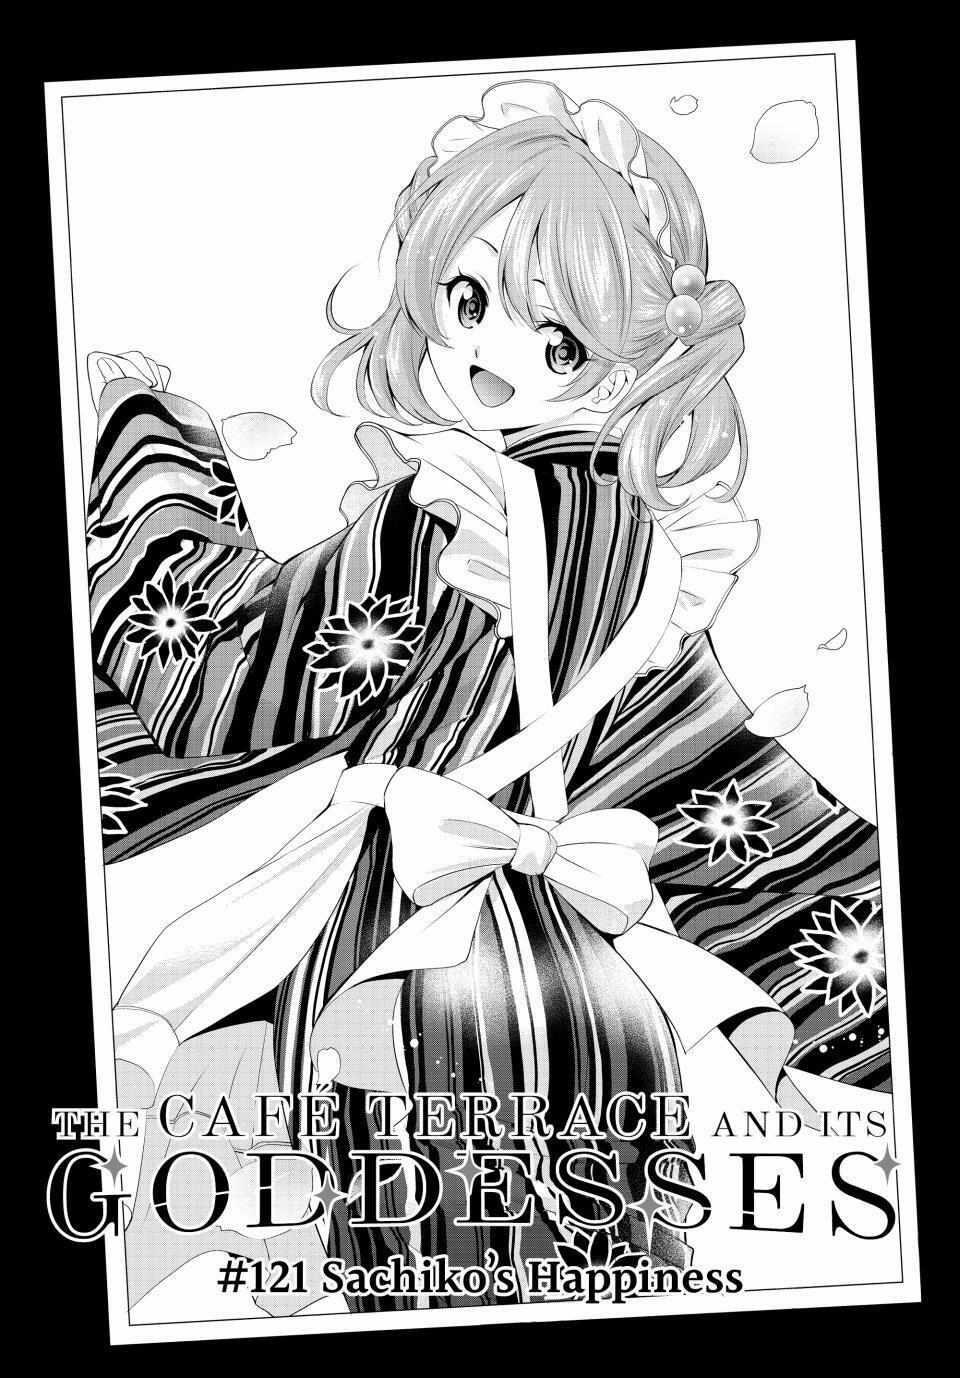 Goddess Cafe Terrace, Chapter 31 - Goddess Cafe Terrace Manga Online